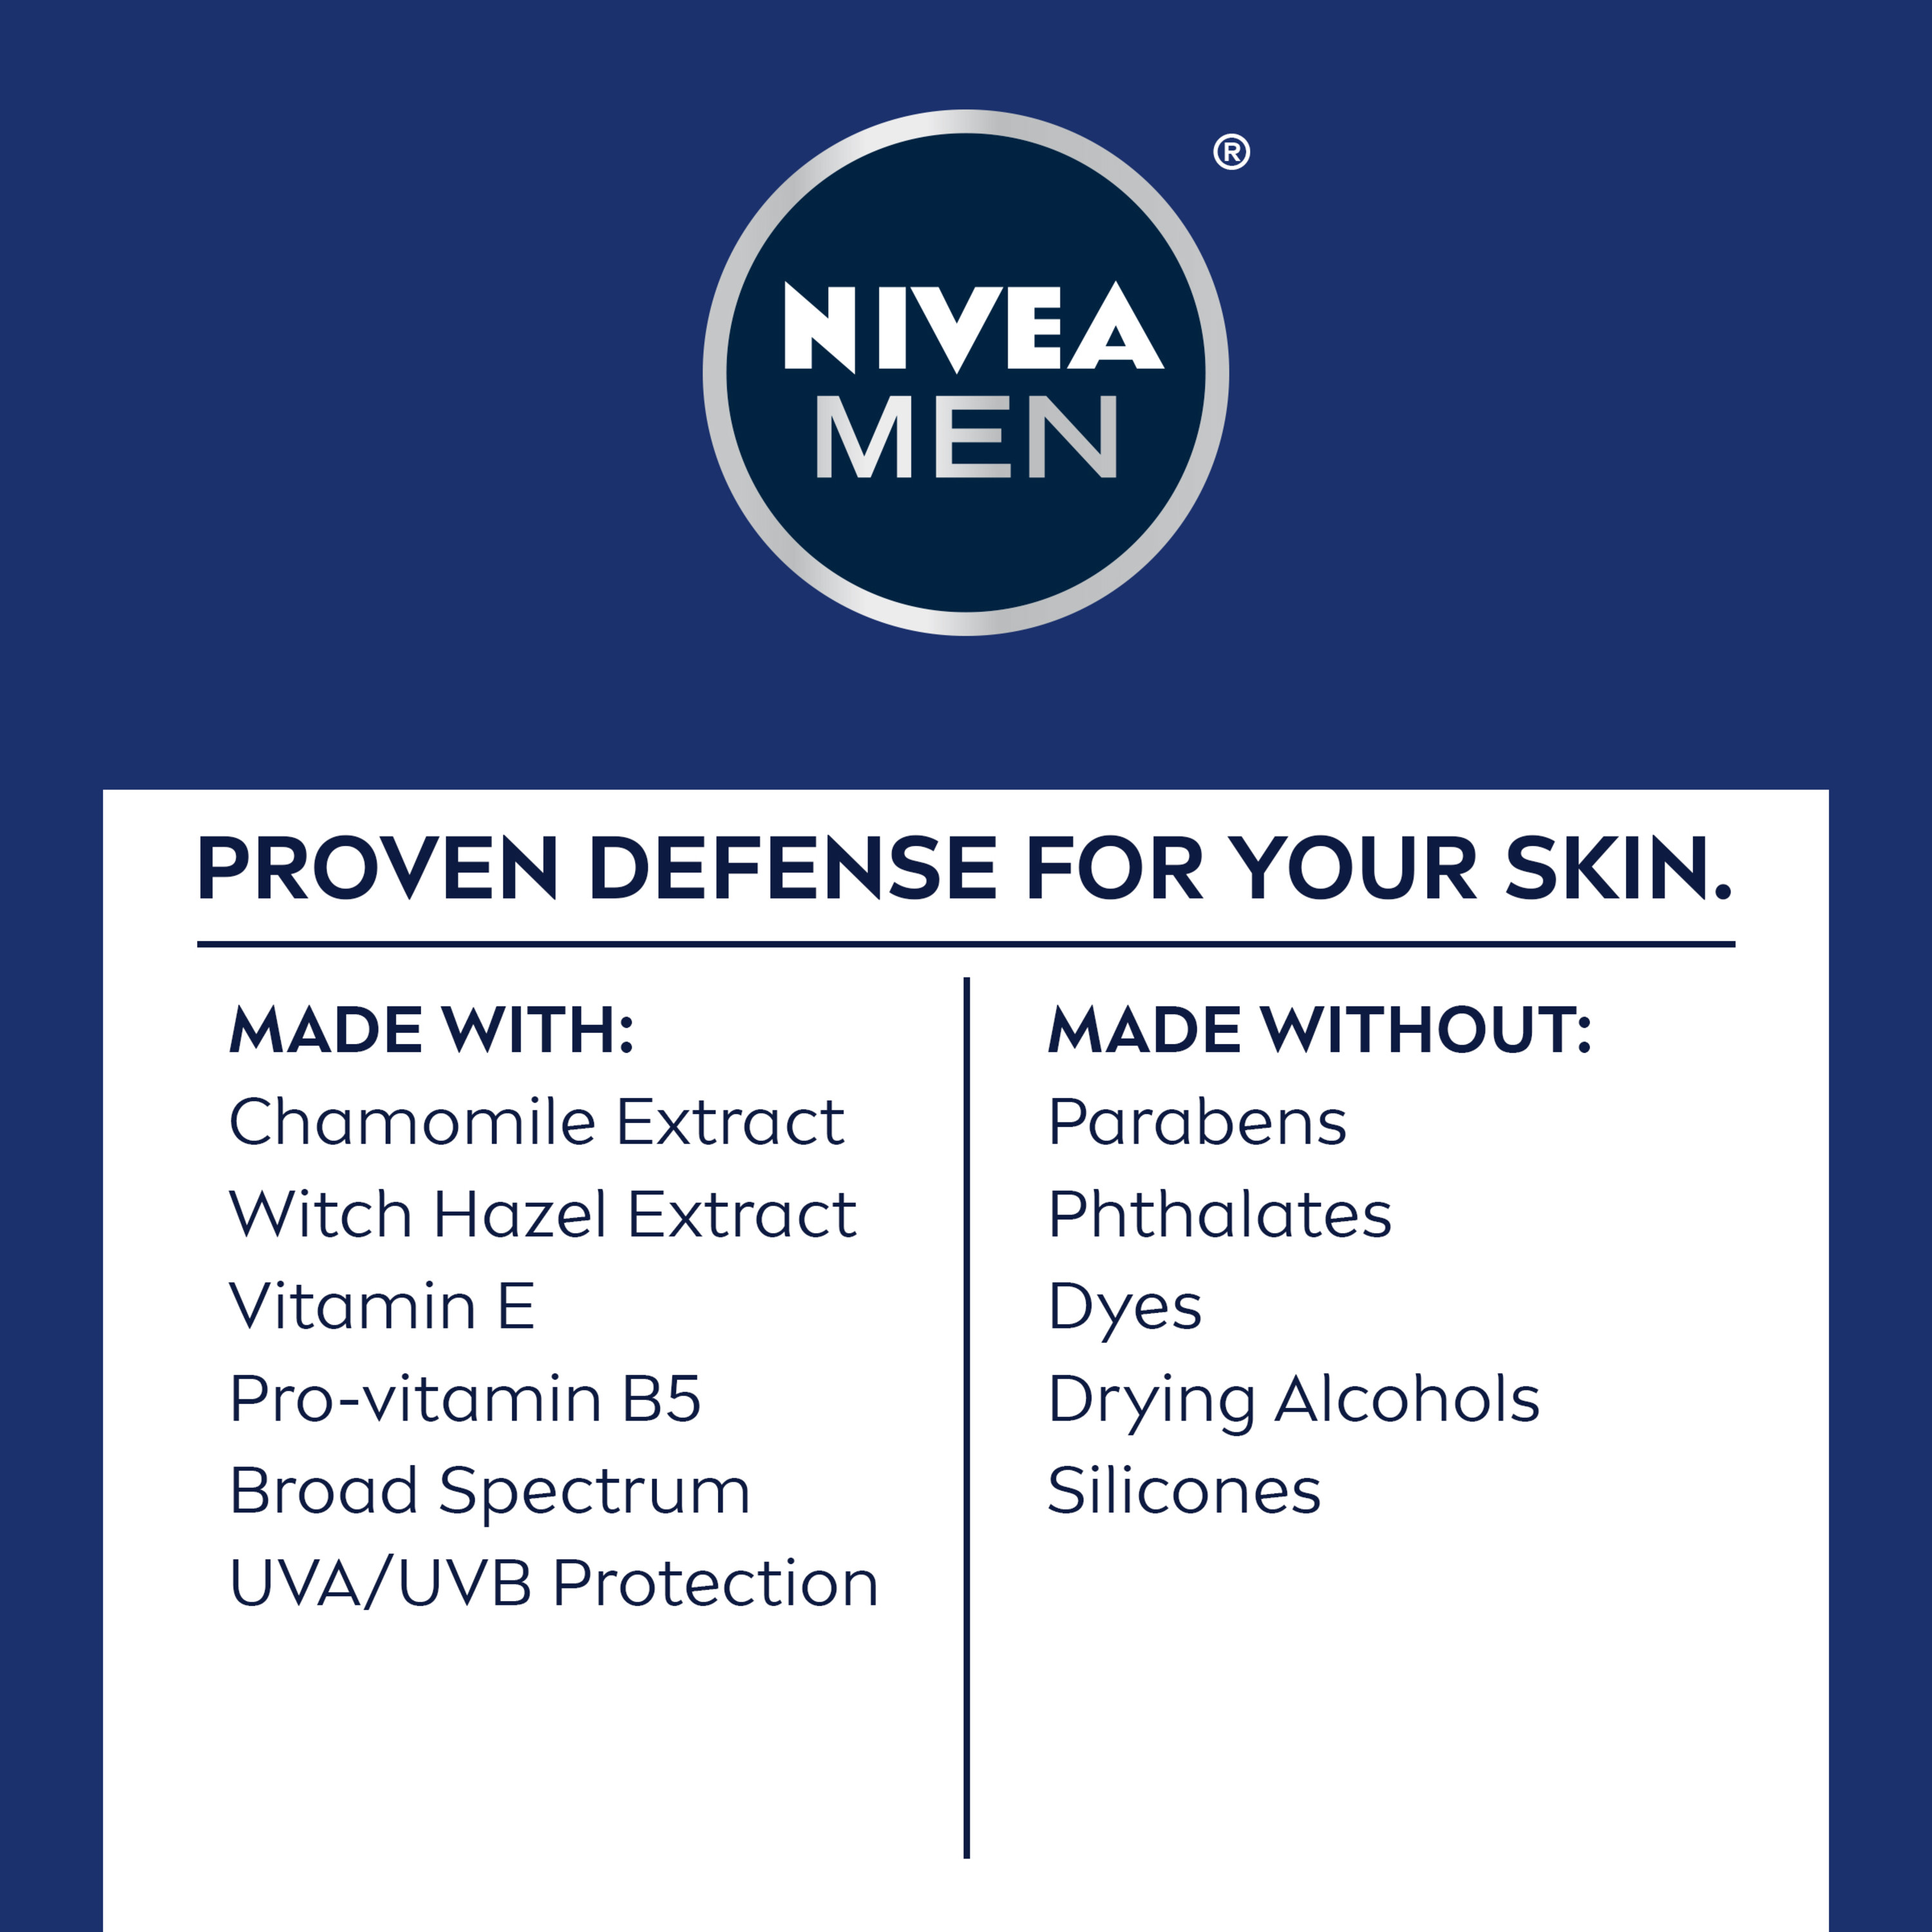 NIVEA MEN Sensitive Face Lotion with Broad Spectrum Sunscreen, SPF 15, 2.5 fl oz Tube - image 5 of 8